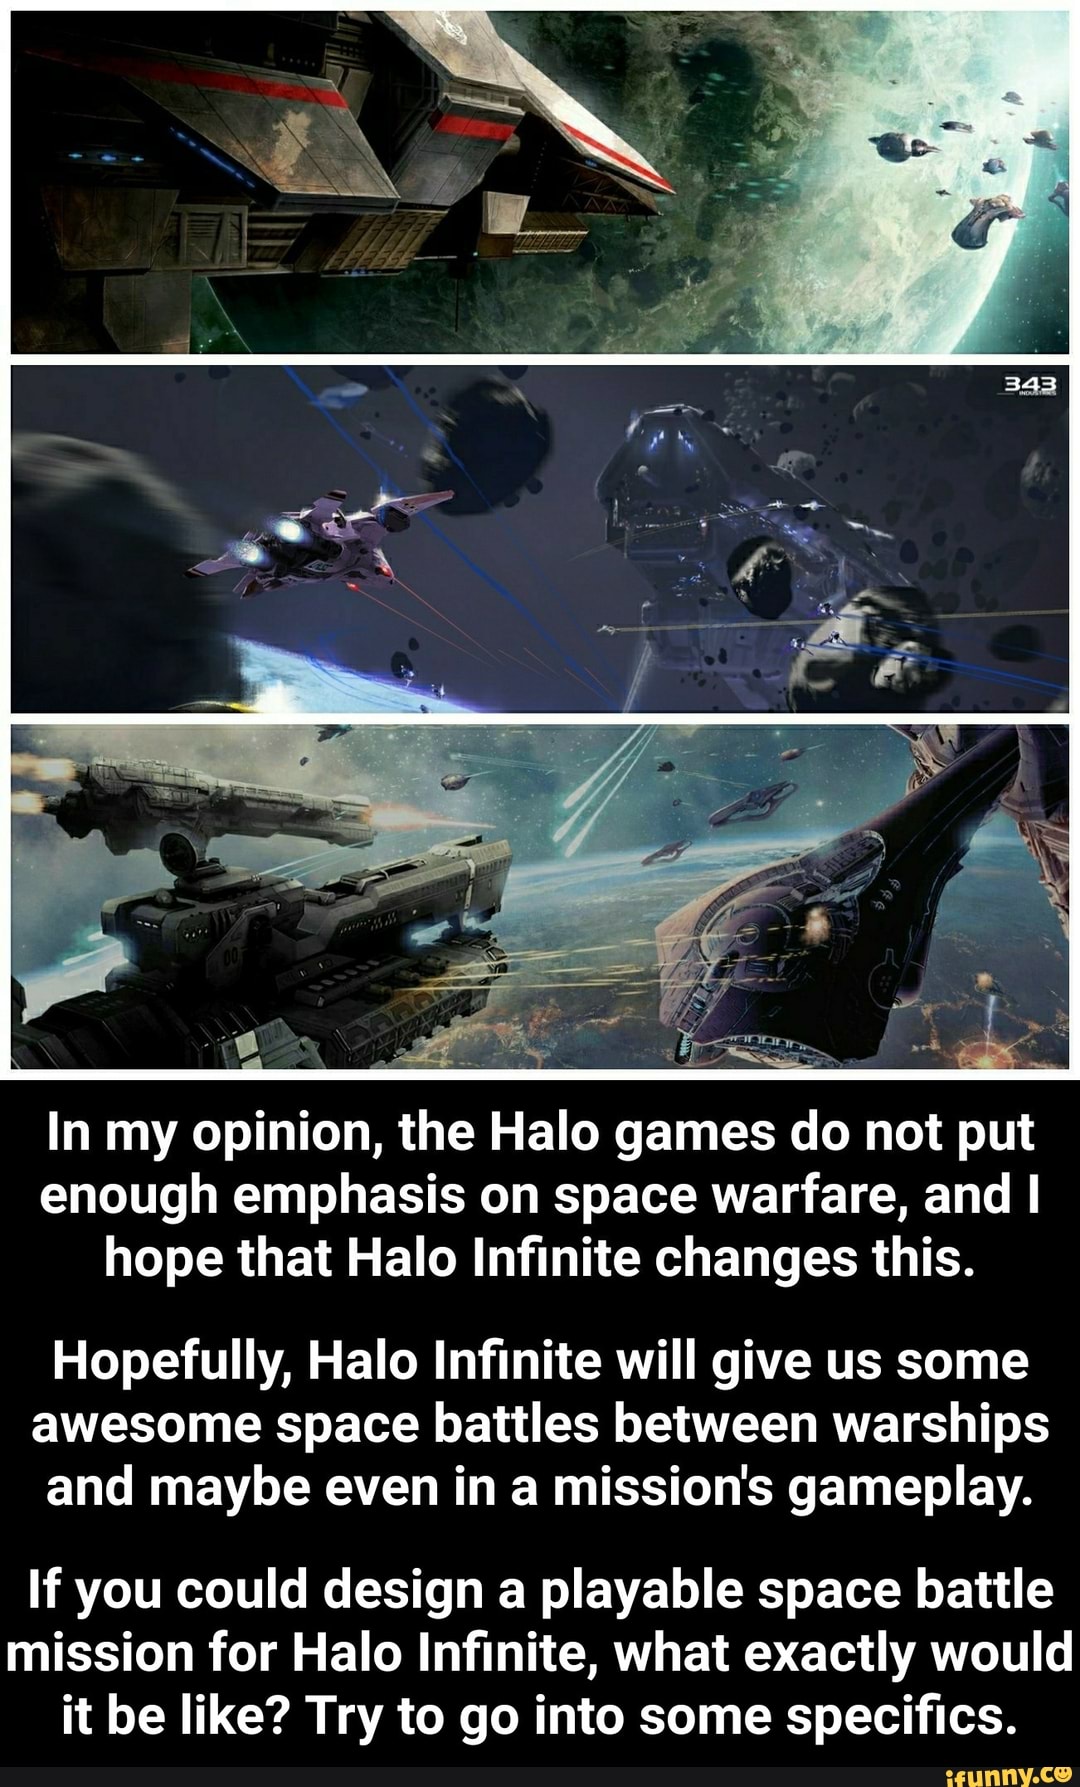 halo wars 2 space battles